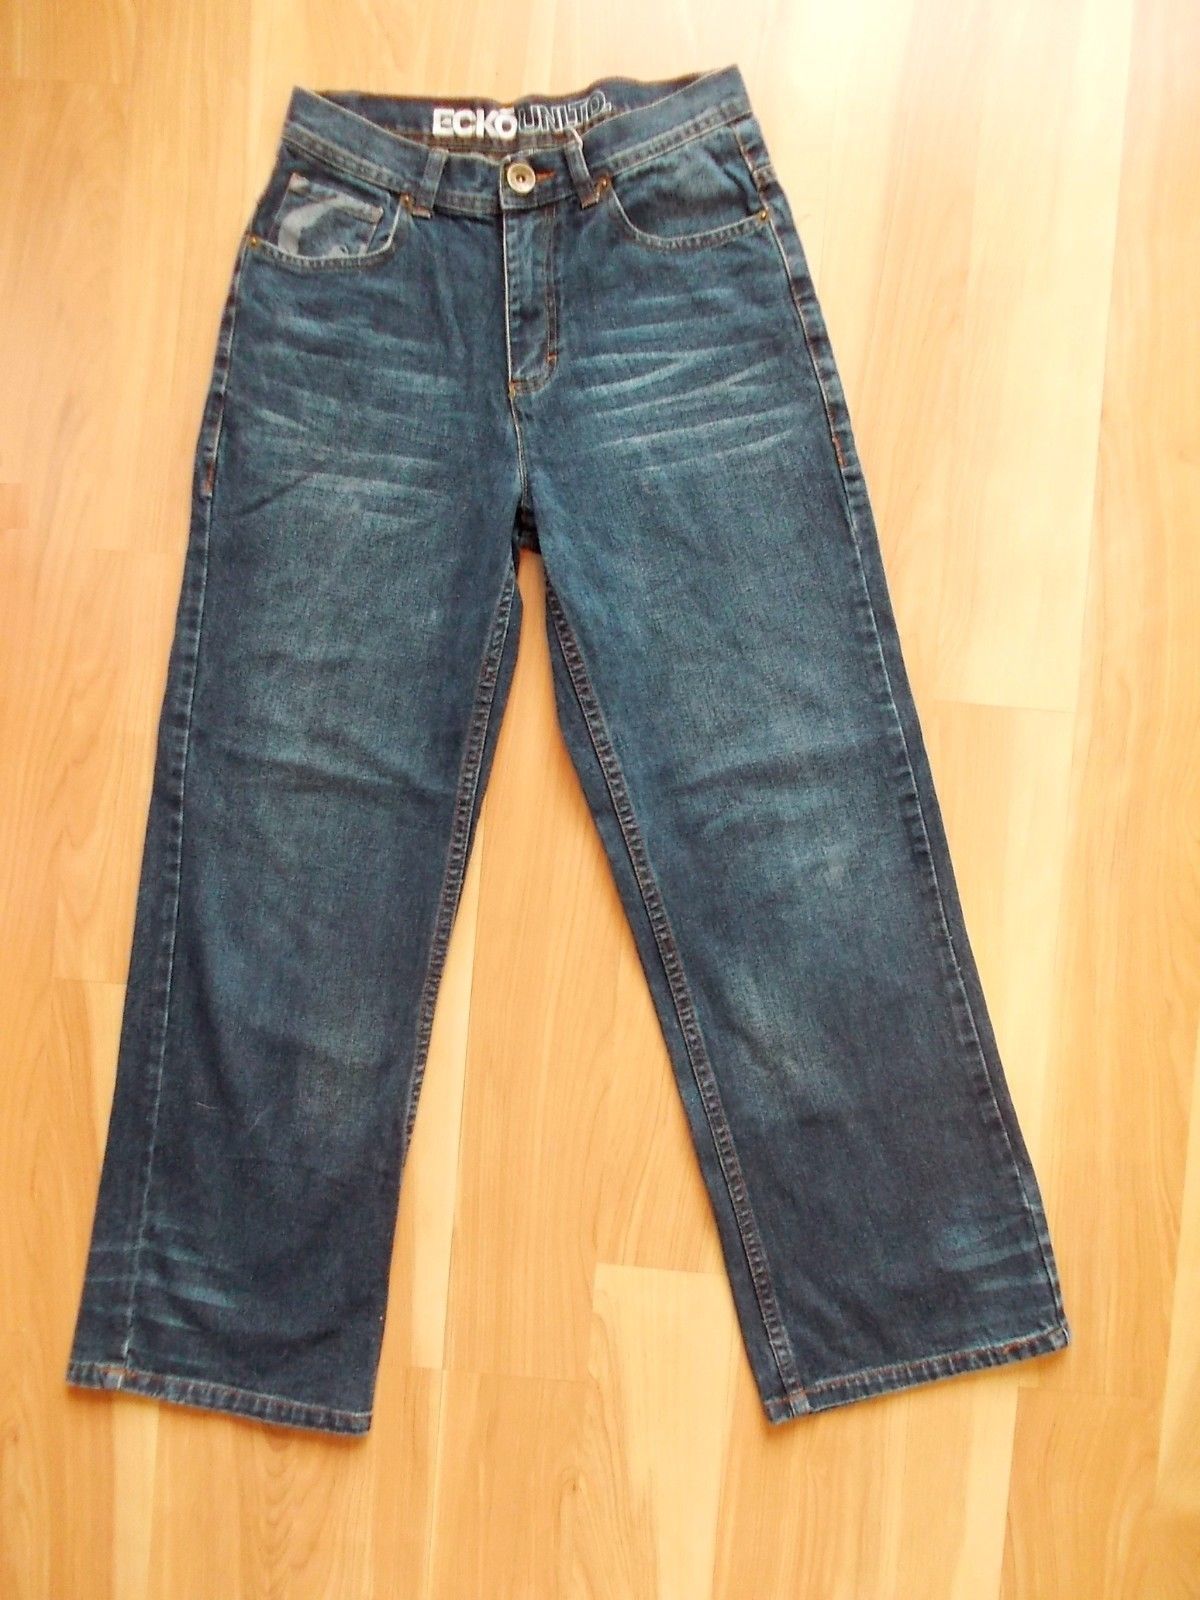 Ecko Unltd Jeans Sz 14 28/26 Straight Leg 5 Pocket Camo Detail Blue Denim 1972 - $12.19